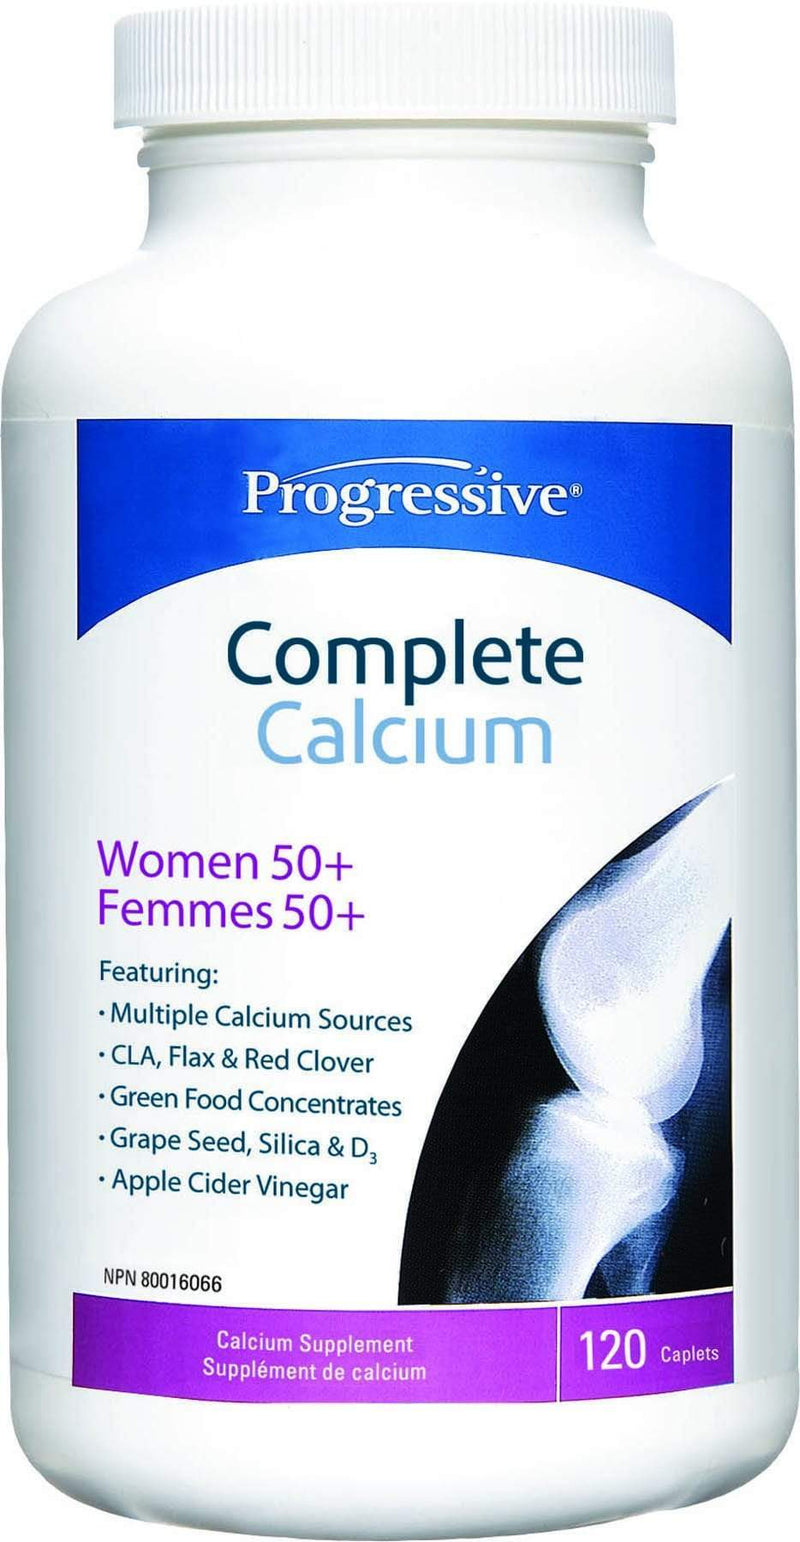 Progressive Complete Calcium for Women 50+